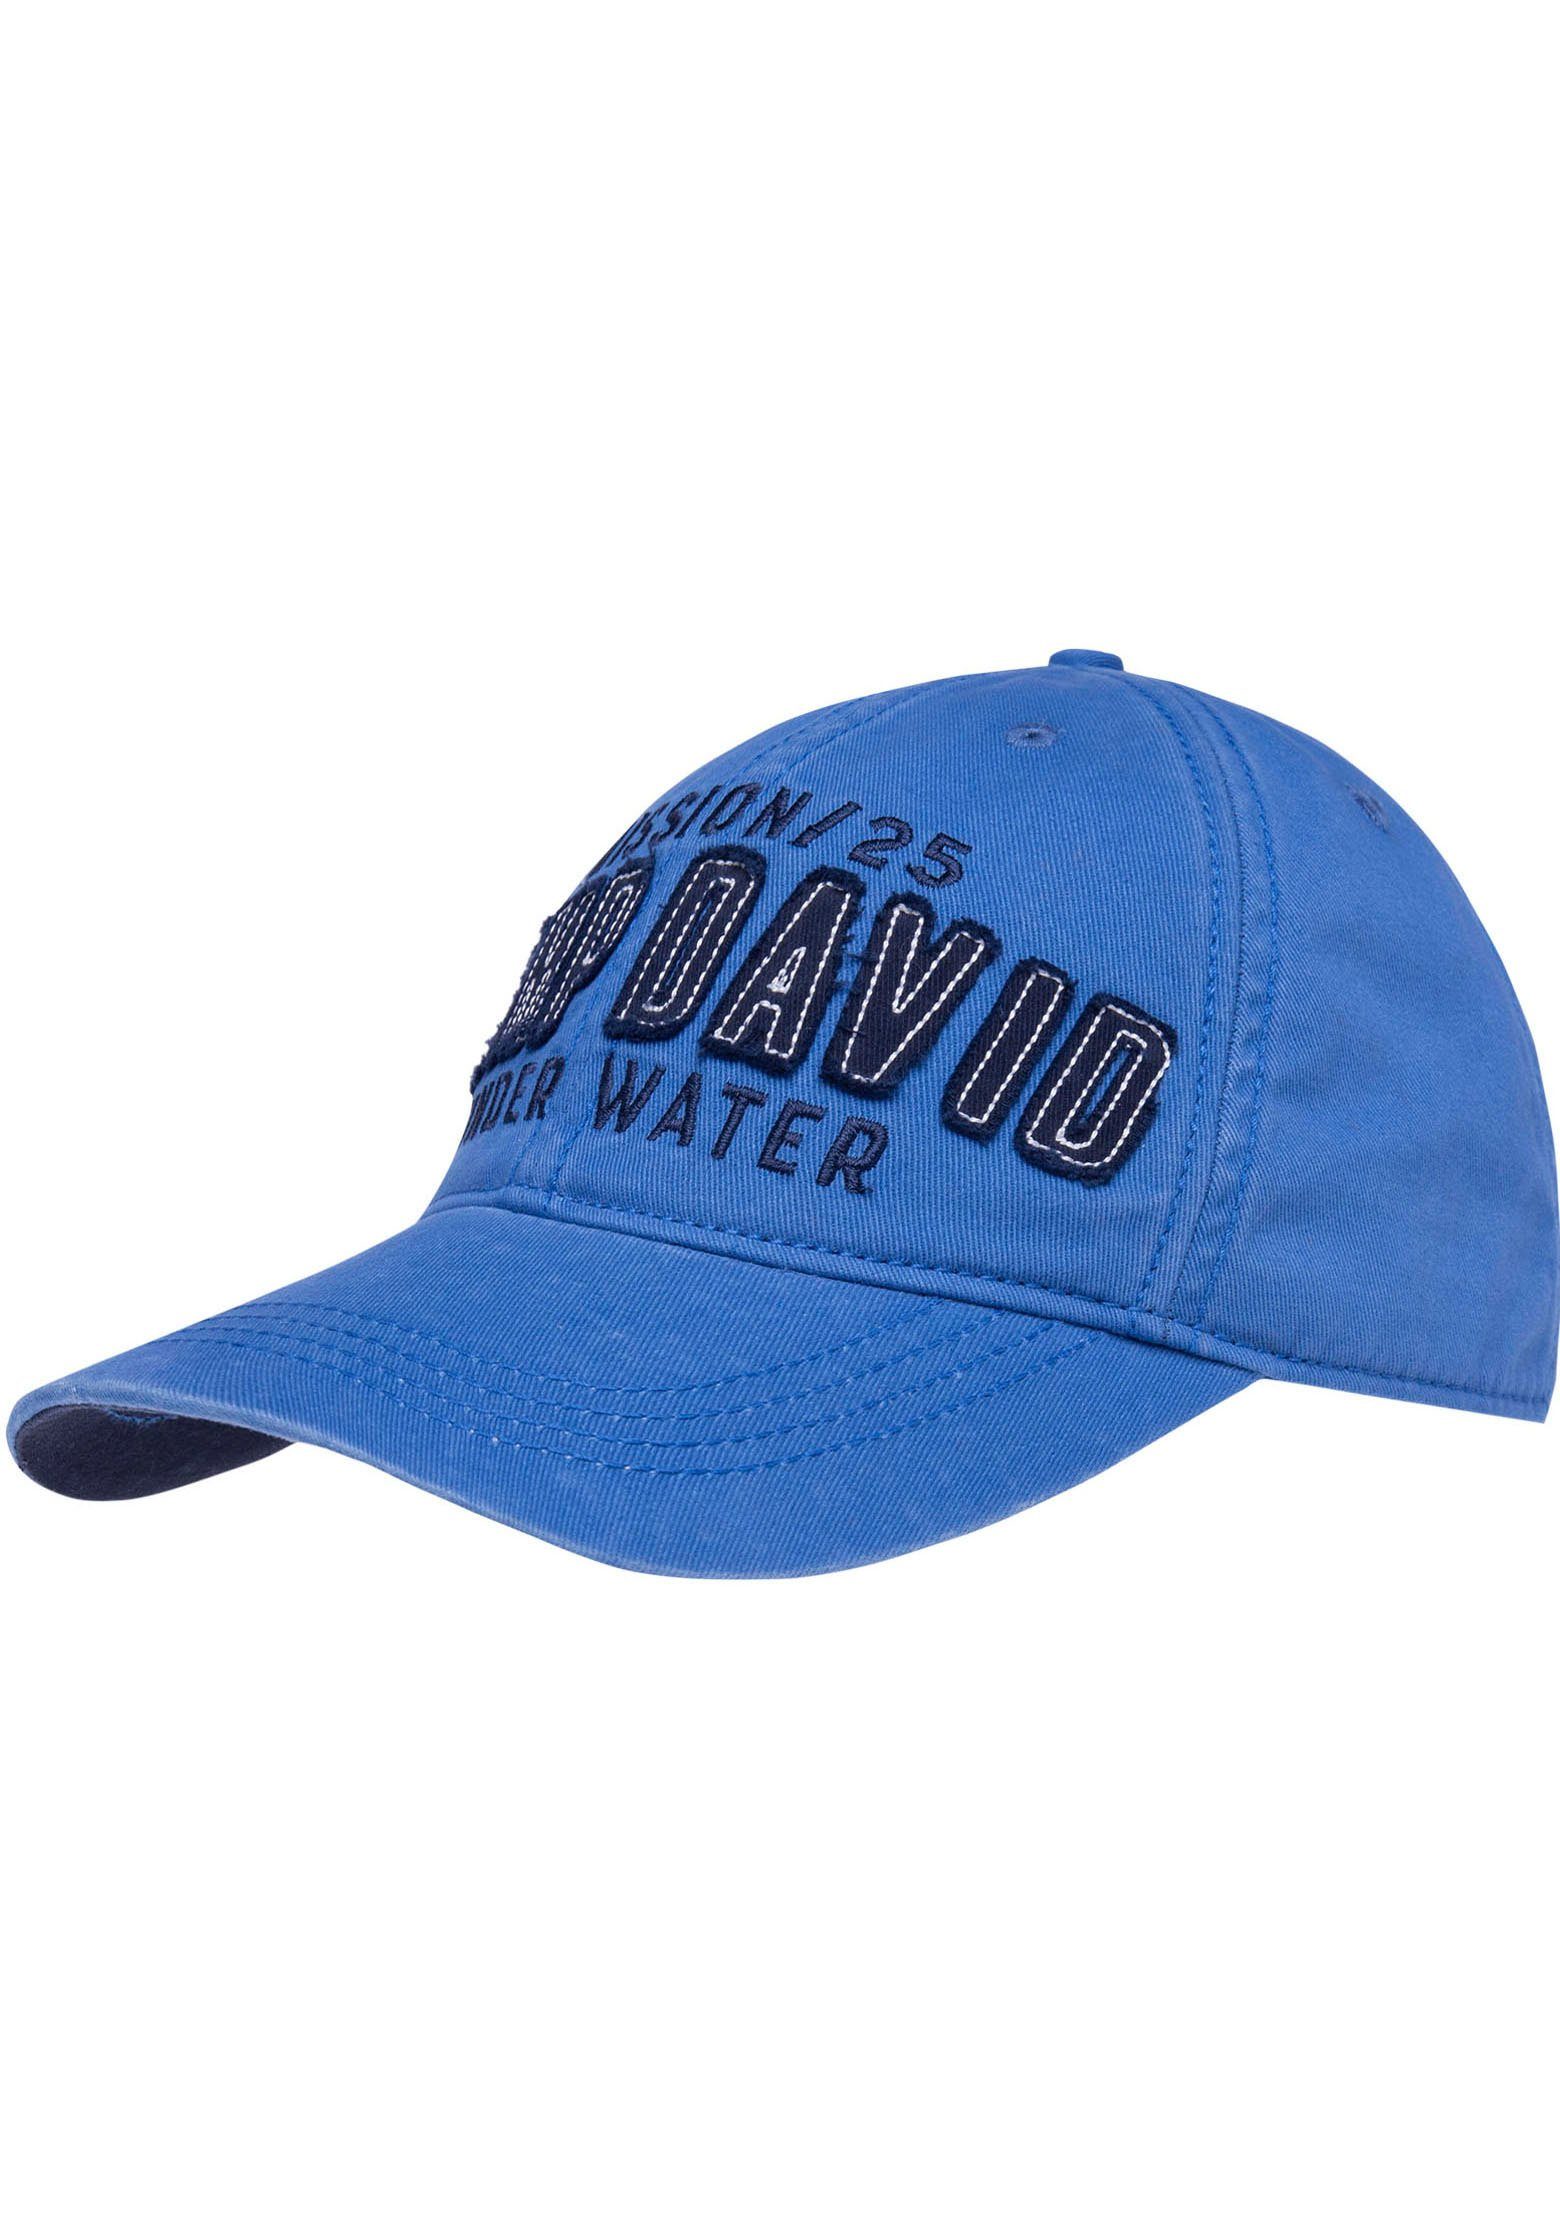 CAMP DAVID Baseball Cap mit pacific blue Optik gewaschener